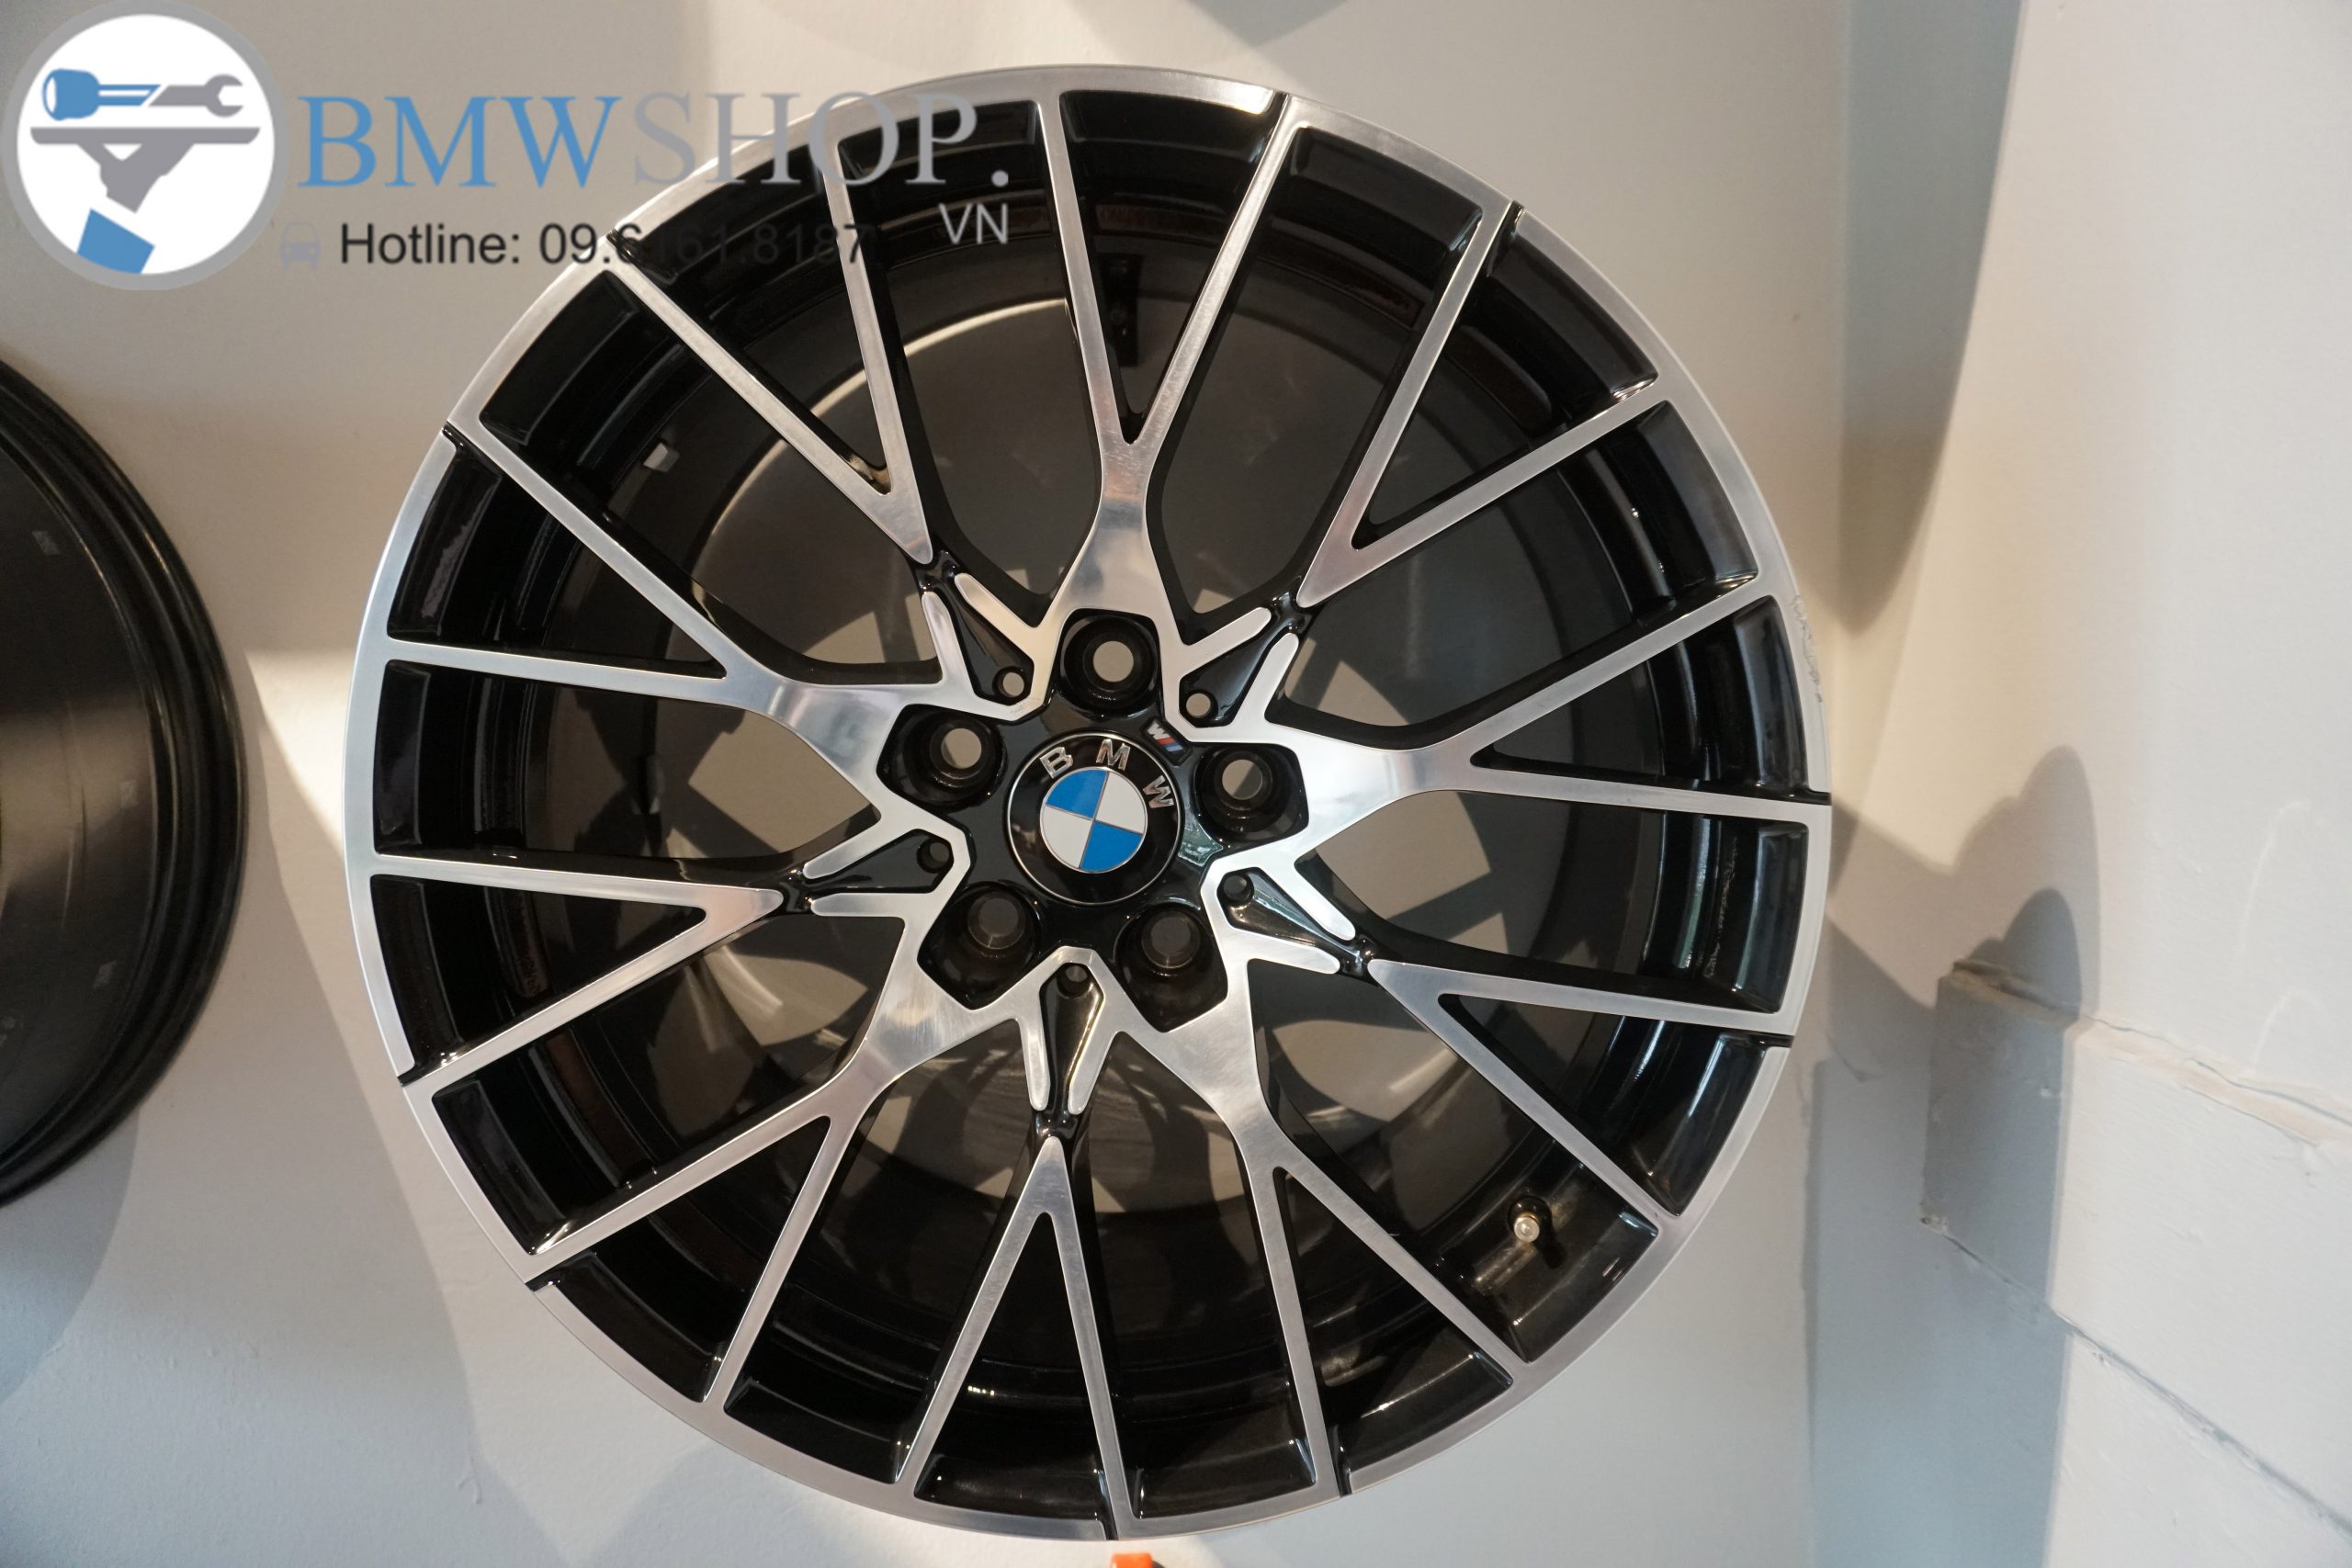 BMW 320i F30 LCI lên mâm huyền thoại BMW 437M 19 inch  0914946789   YouTube